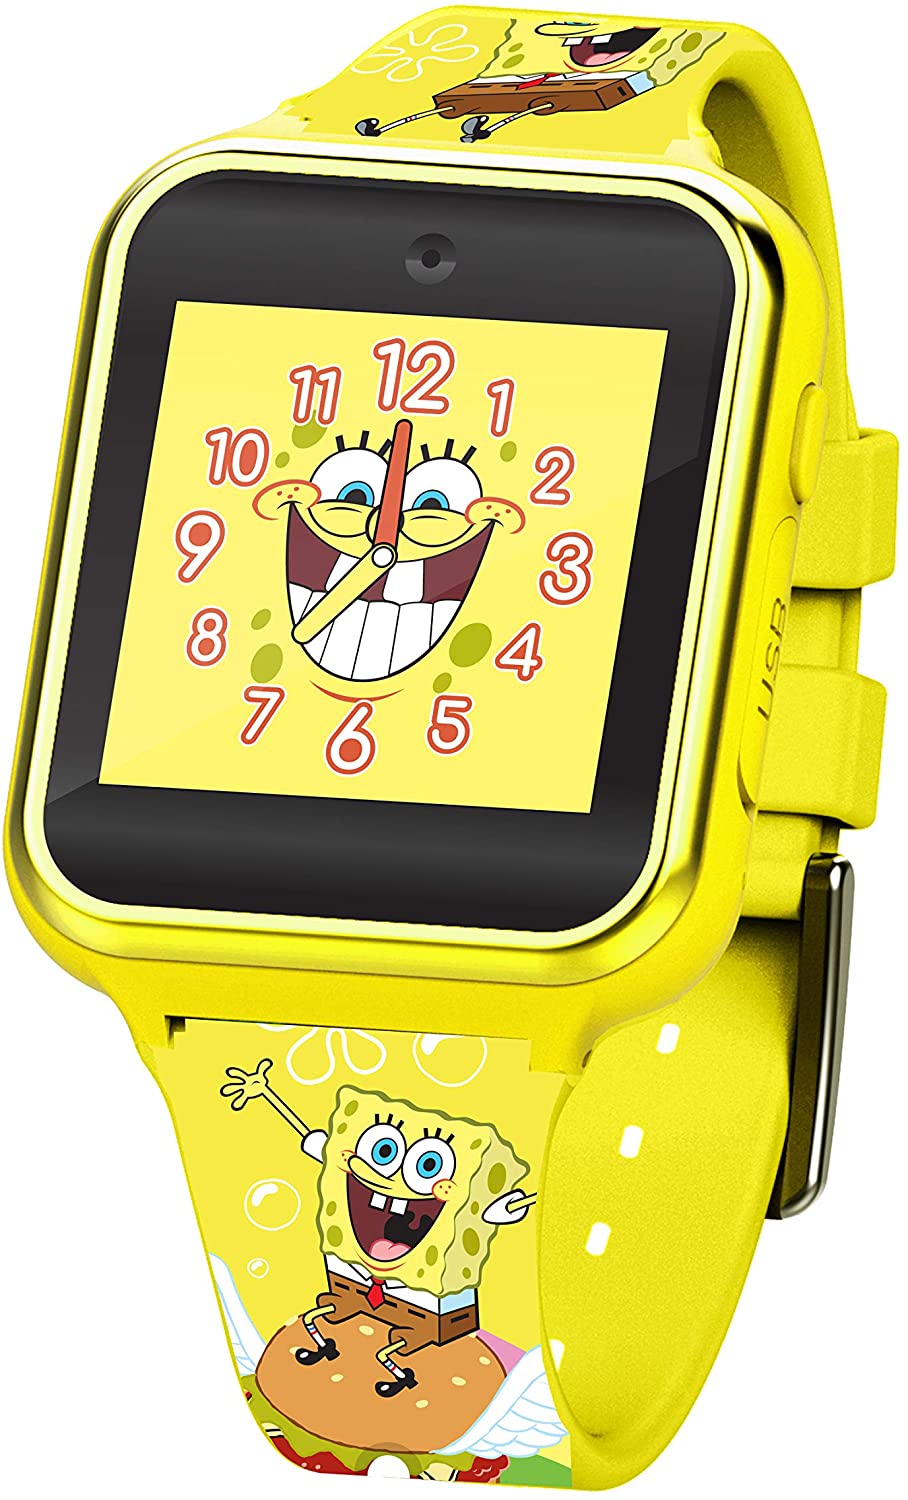 【本日限定価格】 Nickelodeon SGB4090AZ Model: Watch Smart